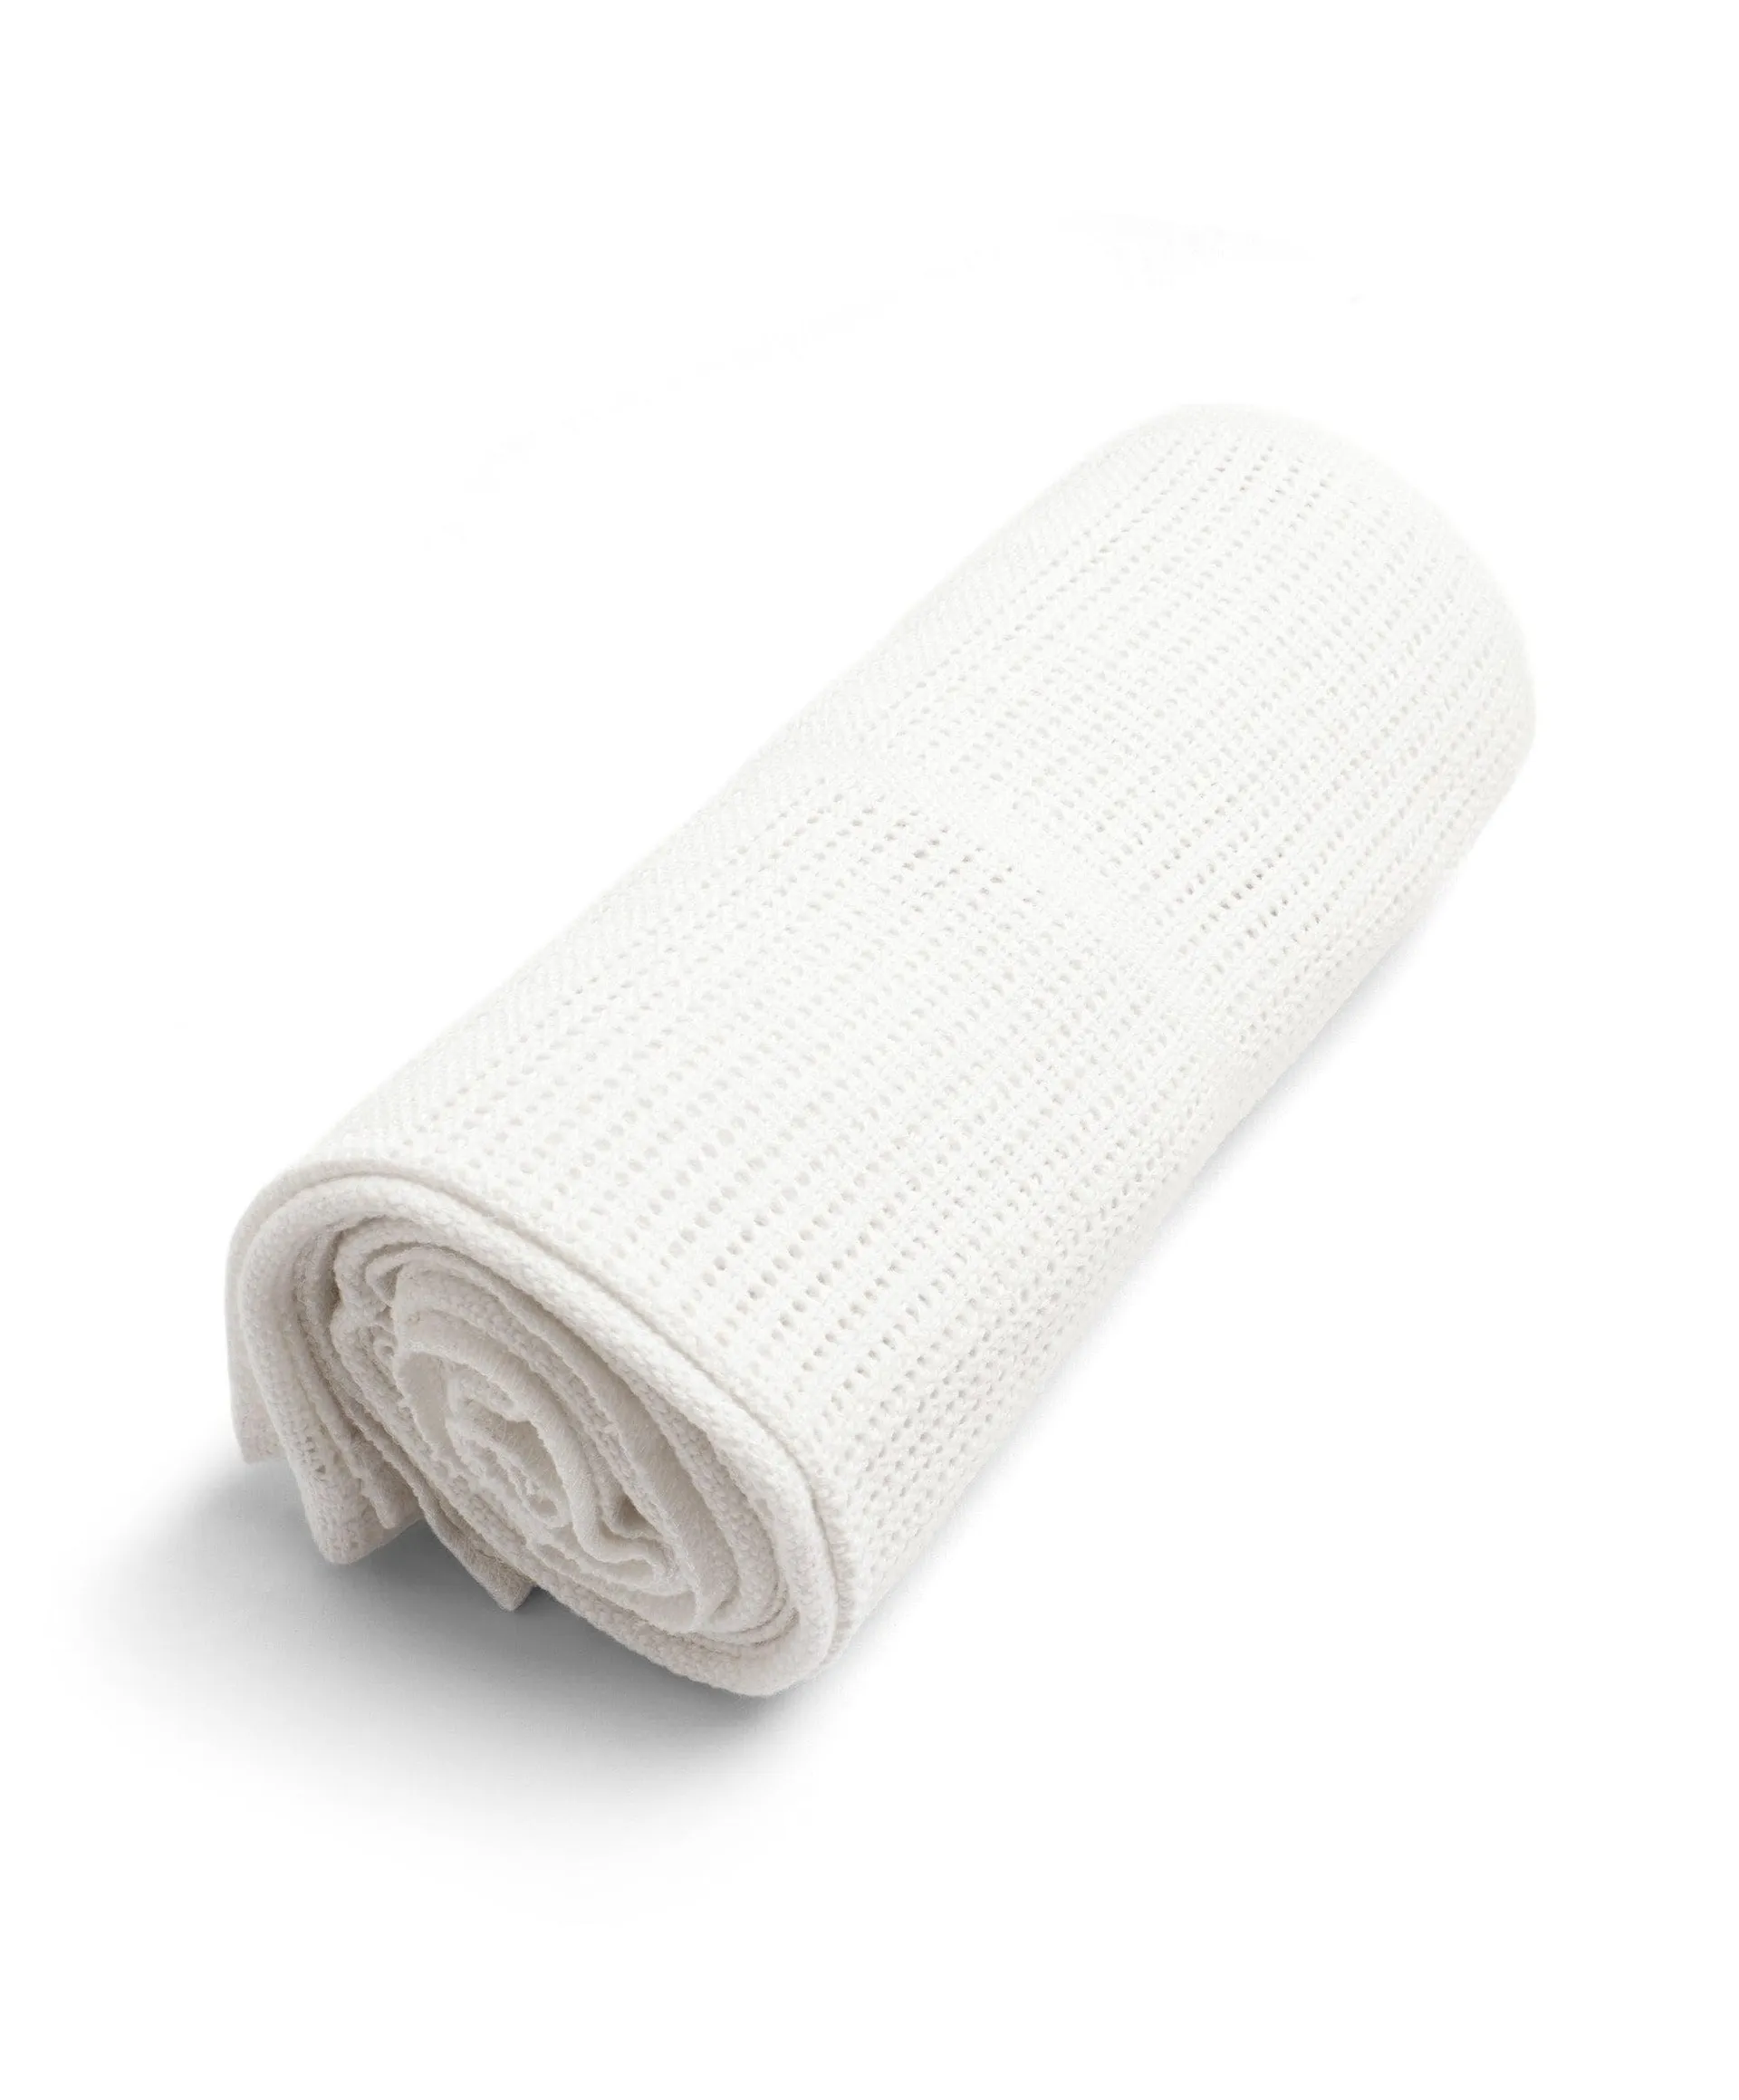 Small Blanket - White